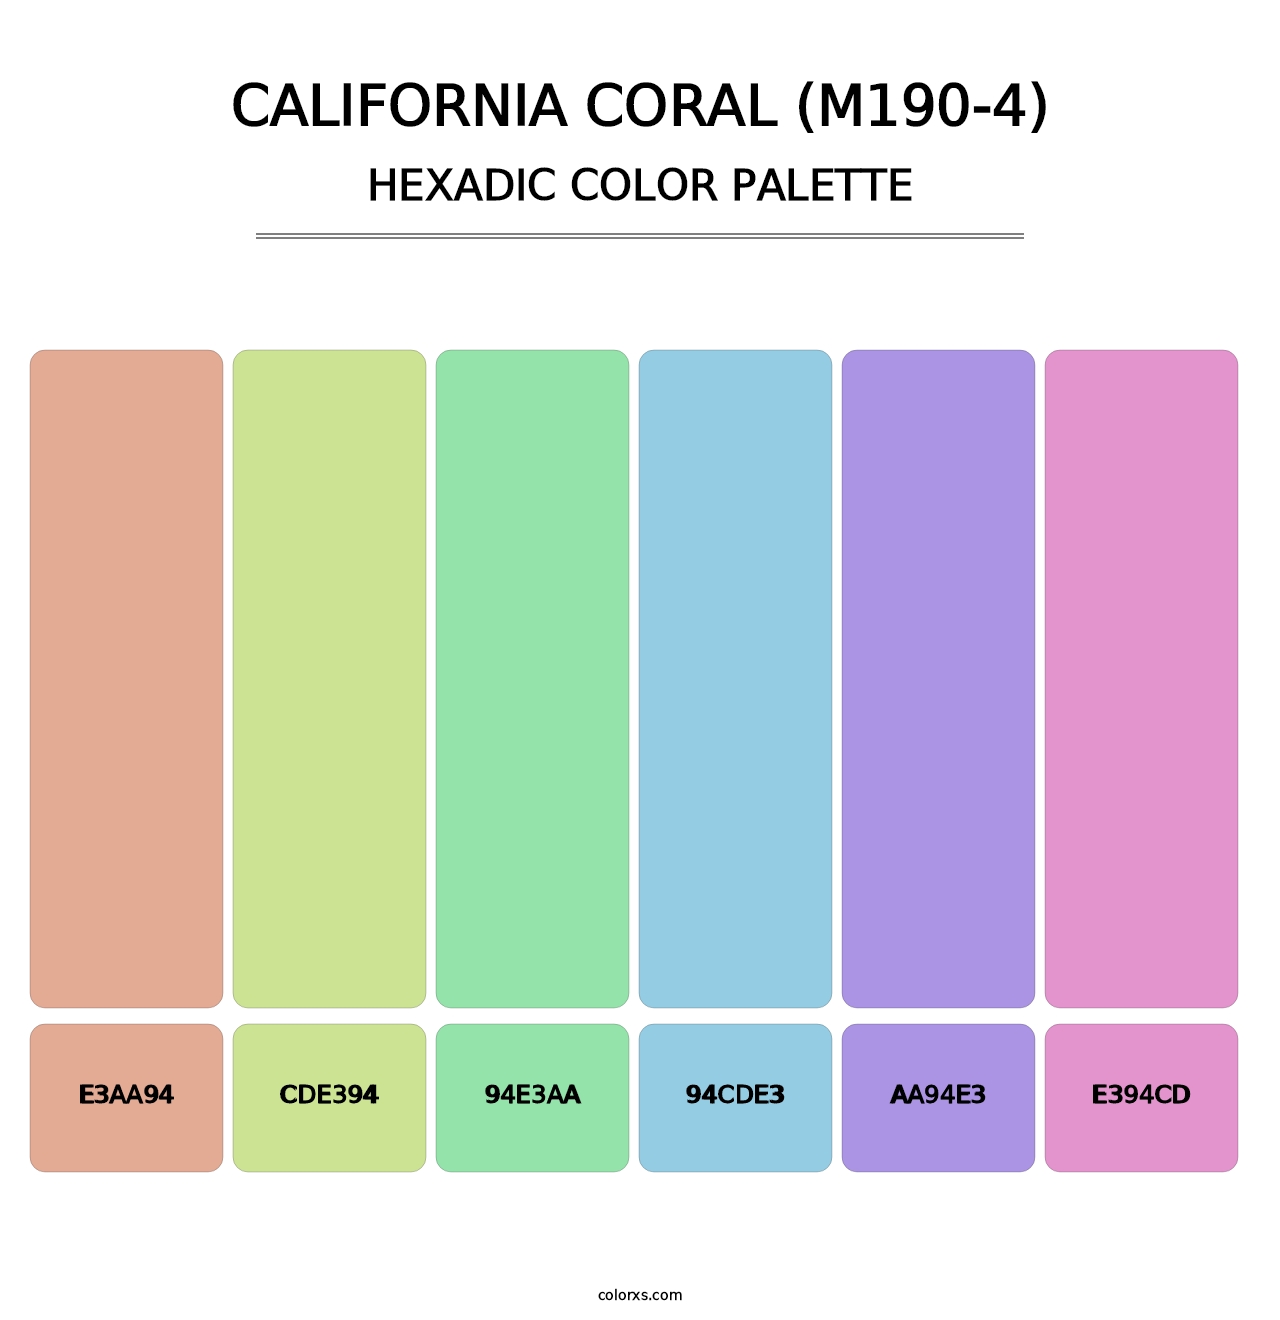 California Coral (M190-4) - Hexadic Color Palette